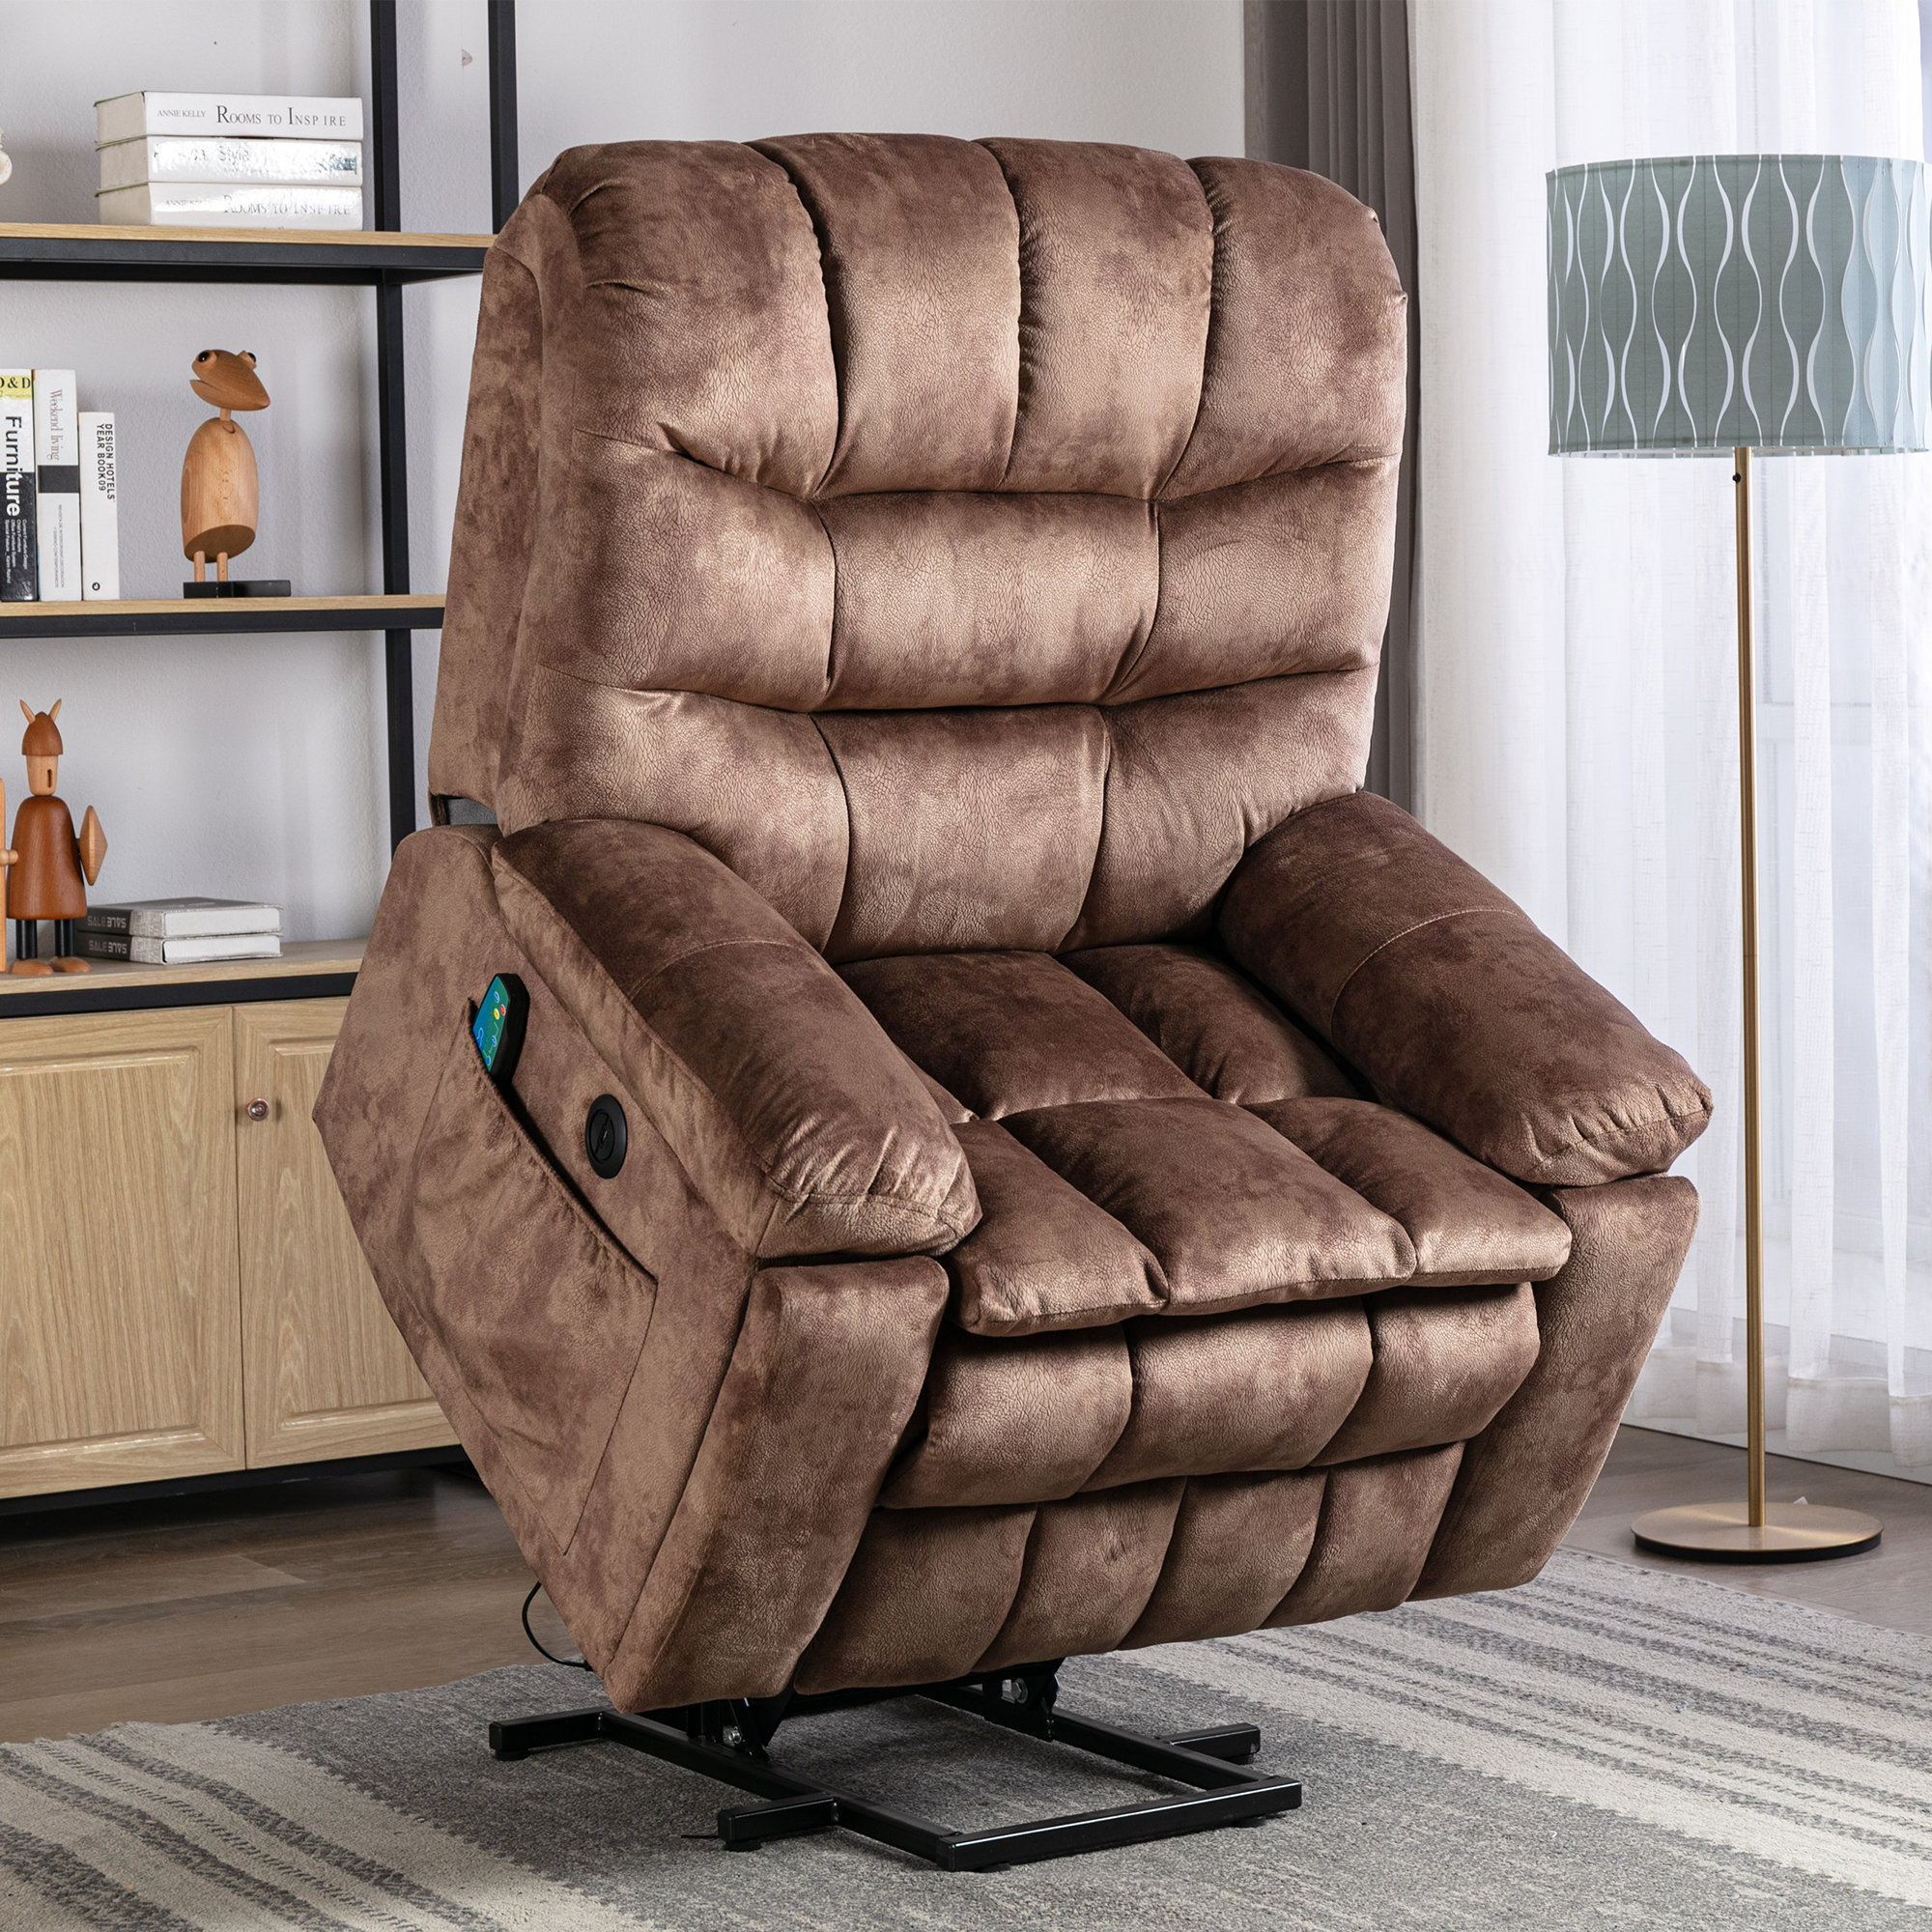 Furniture Handles Made of Smooth Leather elder 